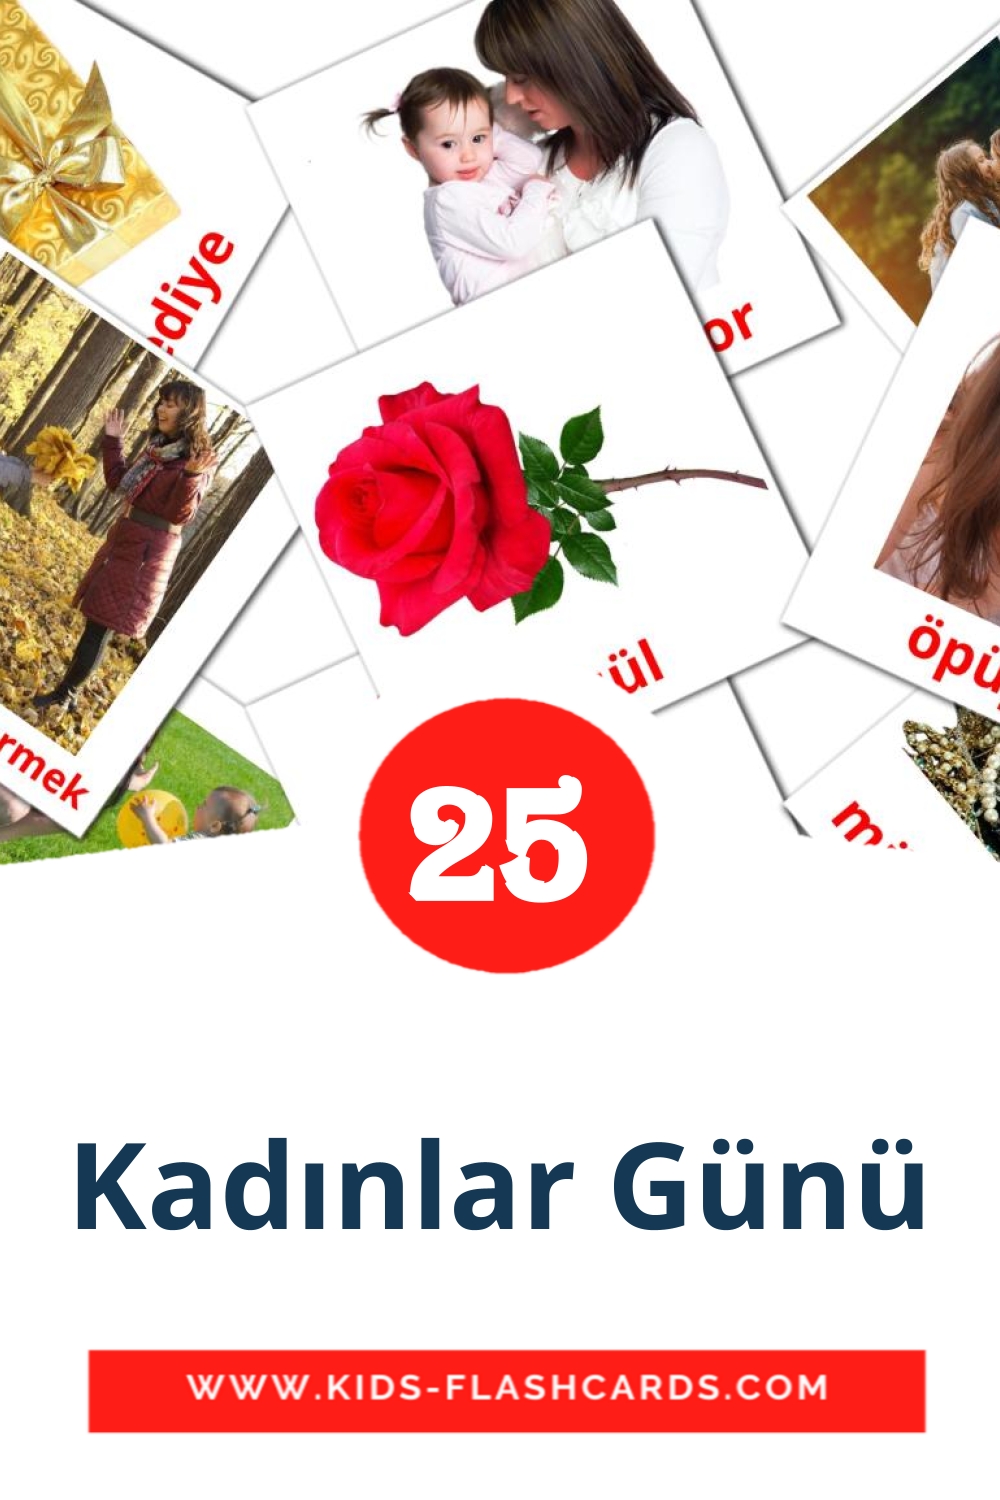 25 Kadınlar Günü fotokaarten voor kleuters in het turkse